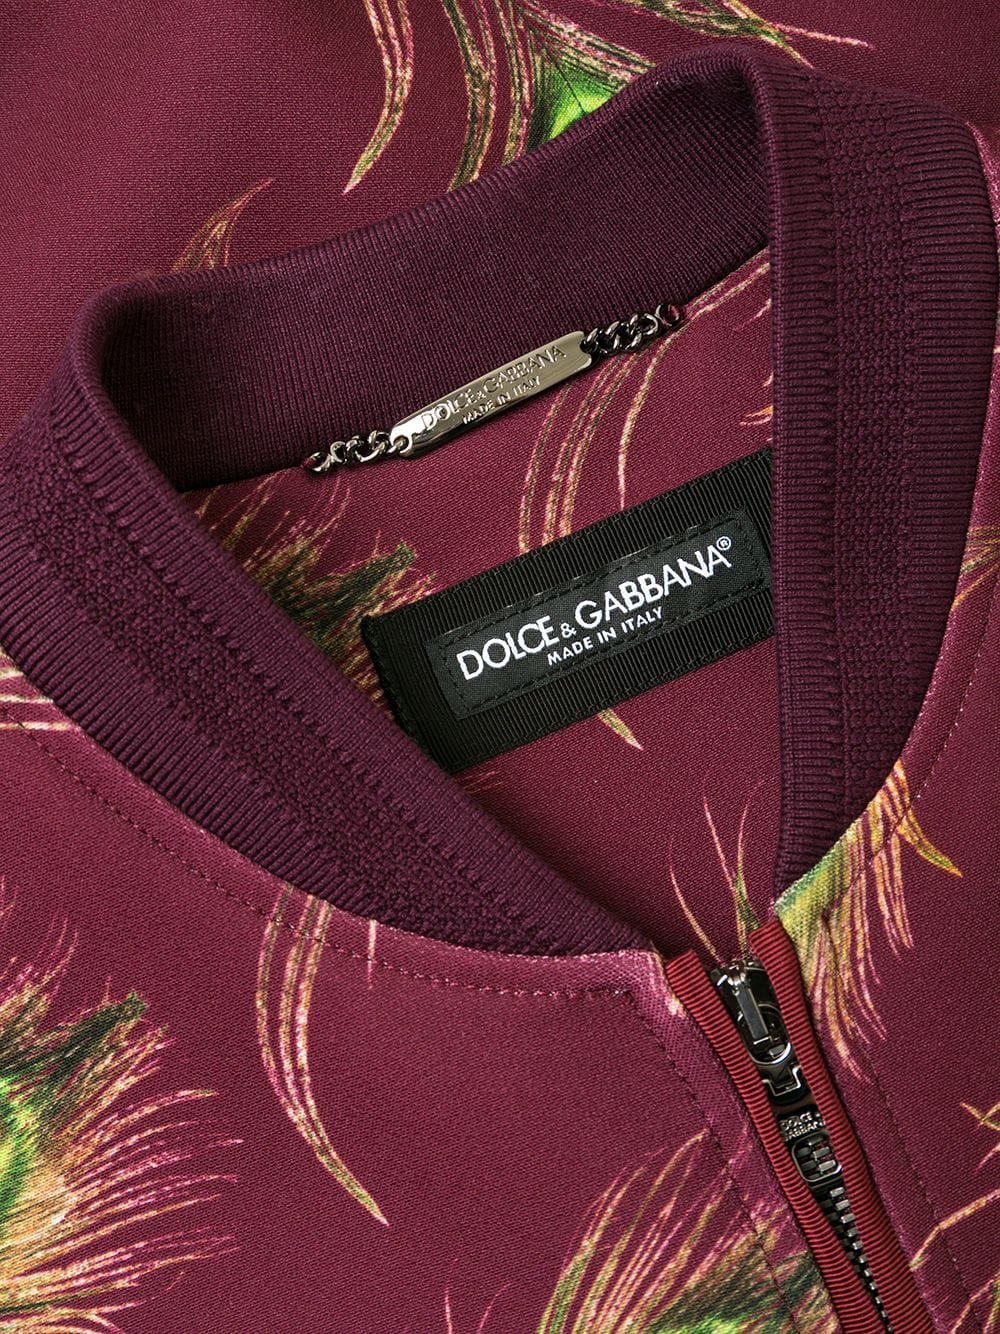 Dolce & Gabbana Peacock Feather Print Bomber Jacket